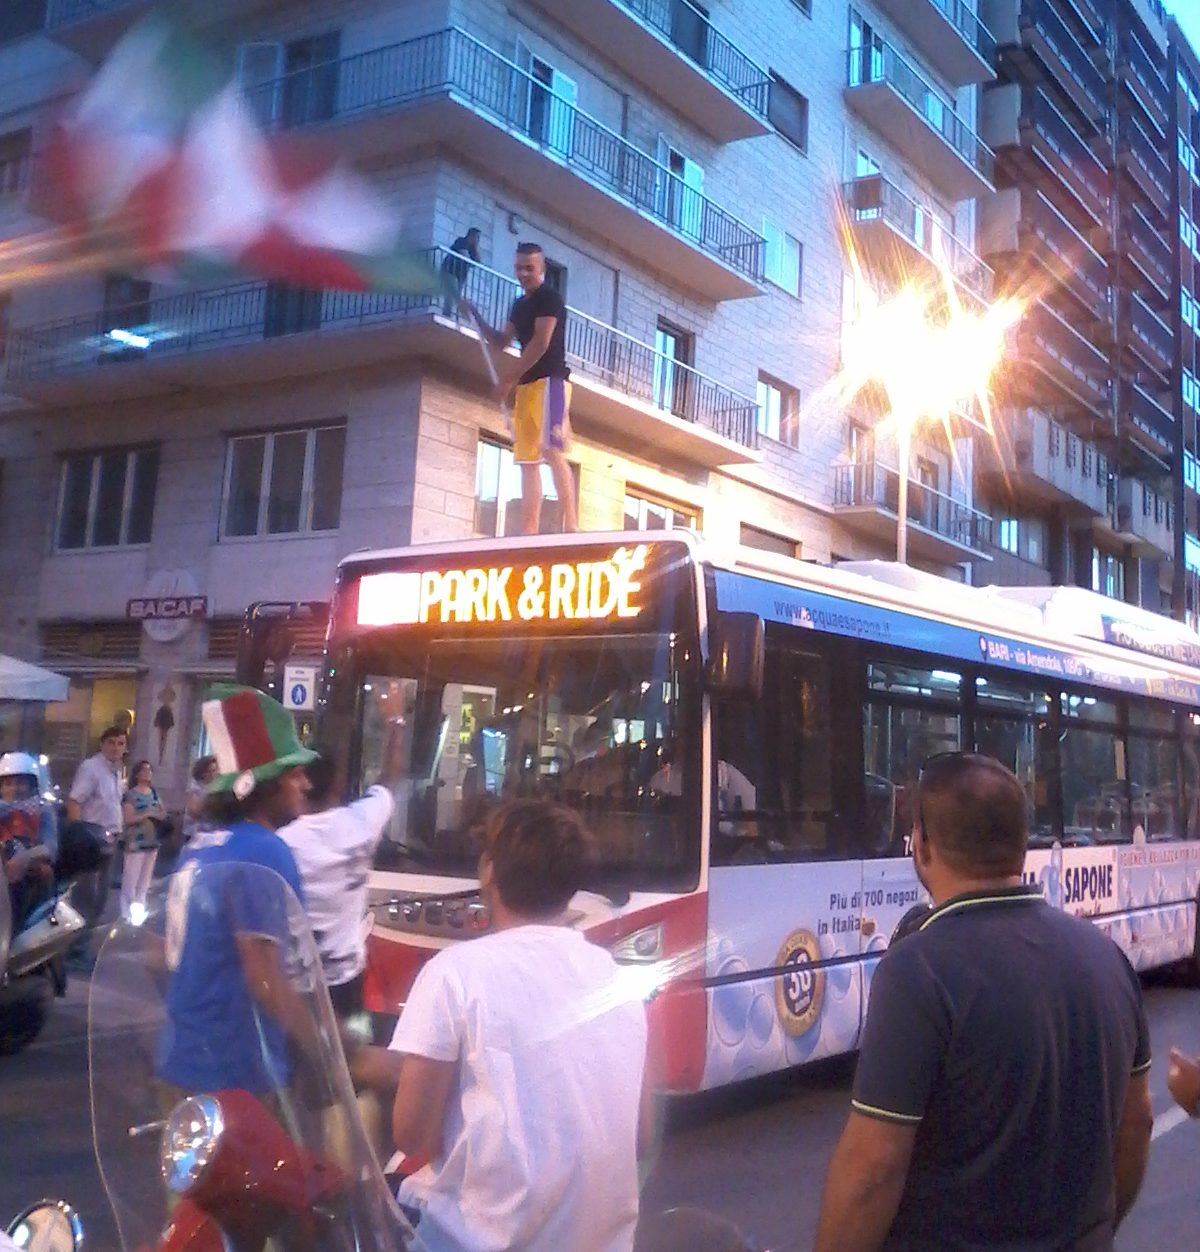 Tifoso festeggia sopra il Bus